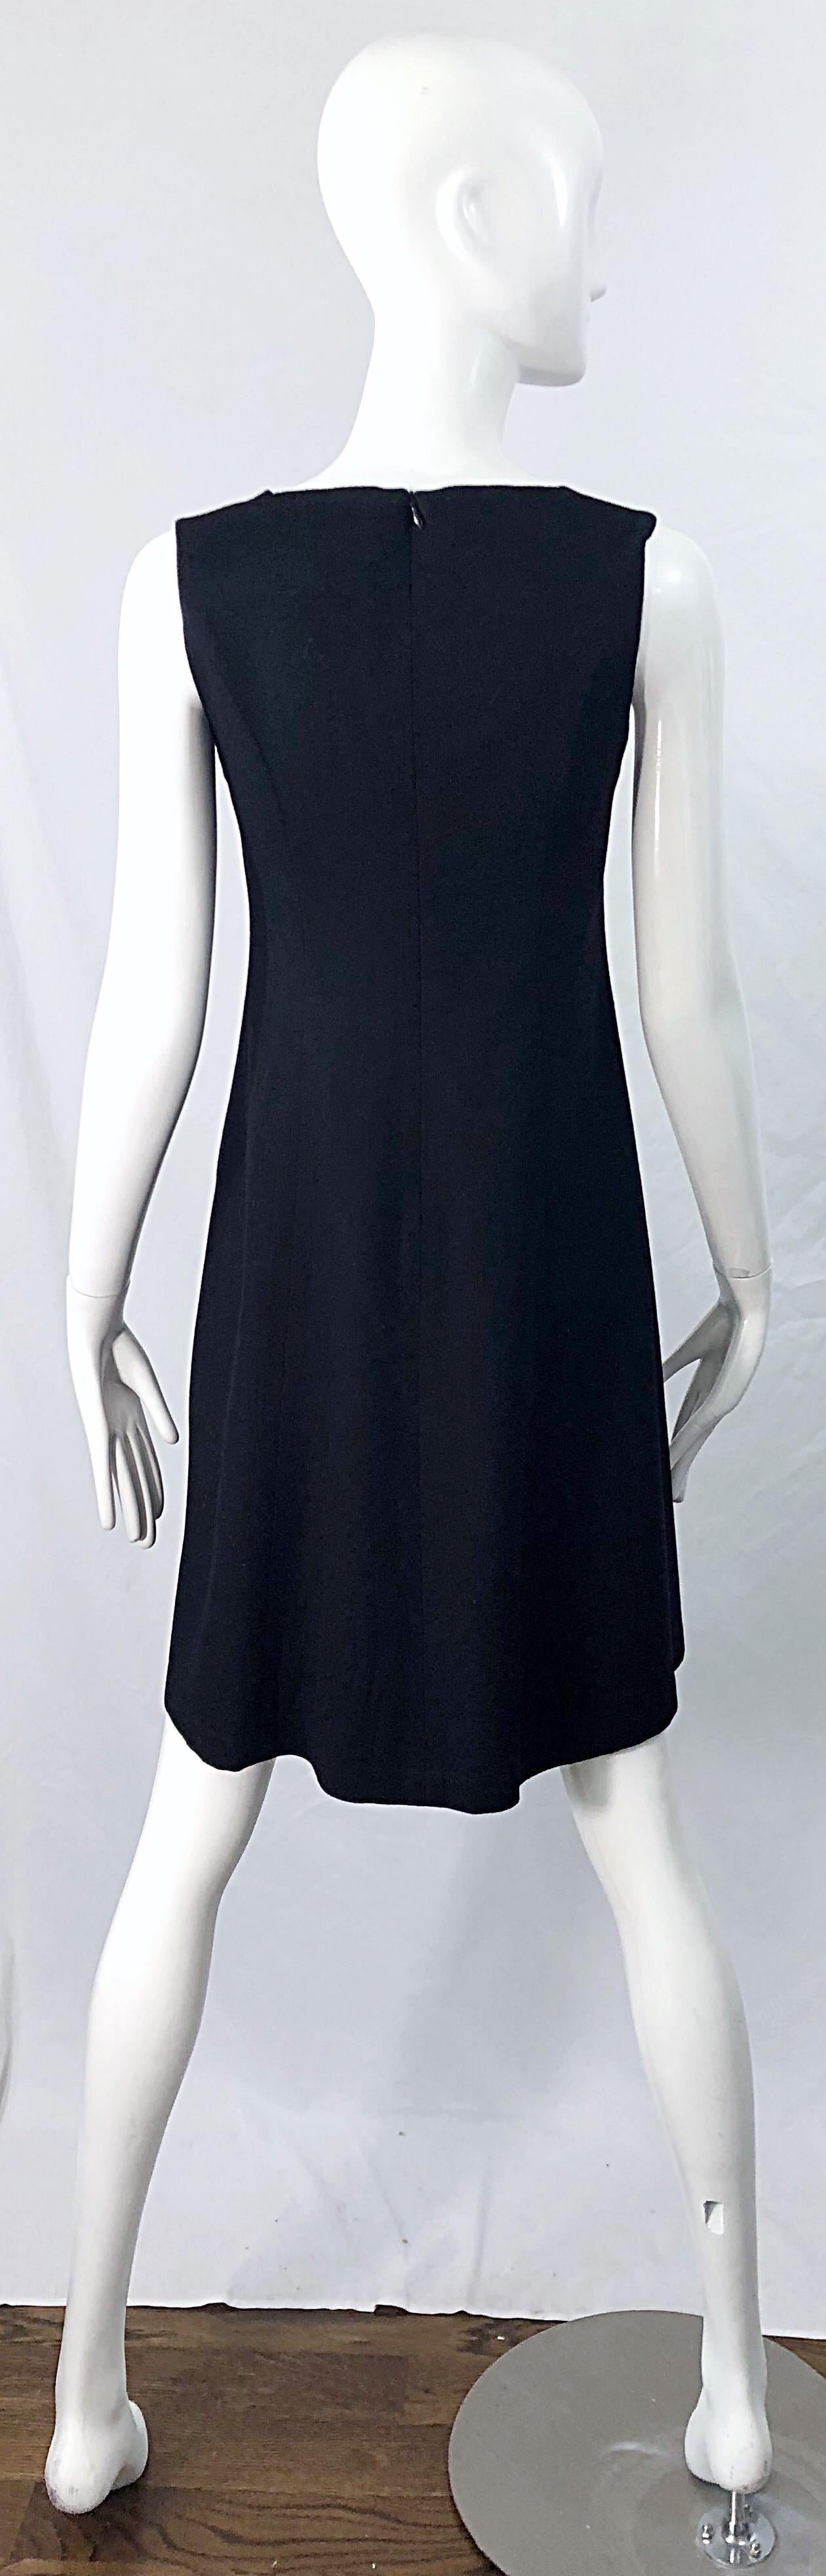 1990s Morgan Le Fay by Liliana Casbal Black Wool Minimalist Vintage 90s Dress For Sale 1